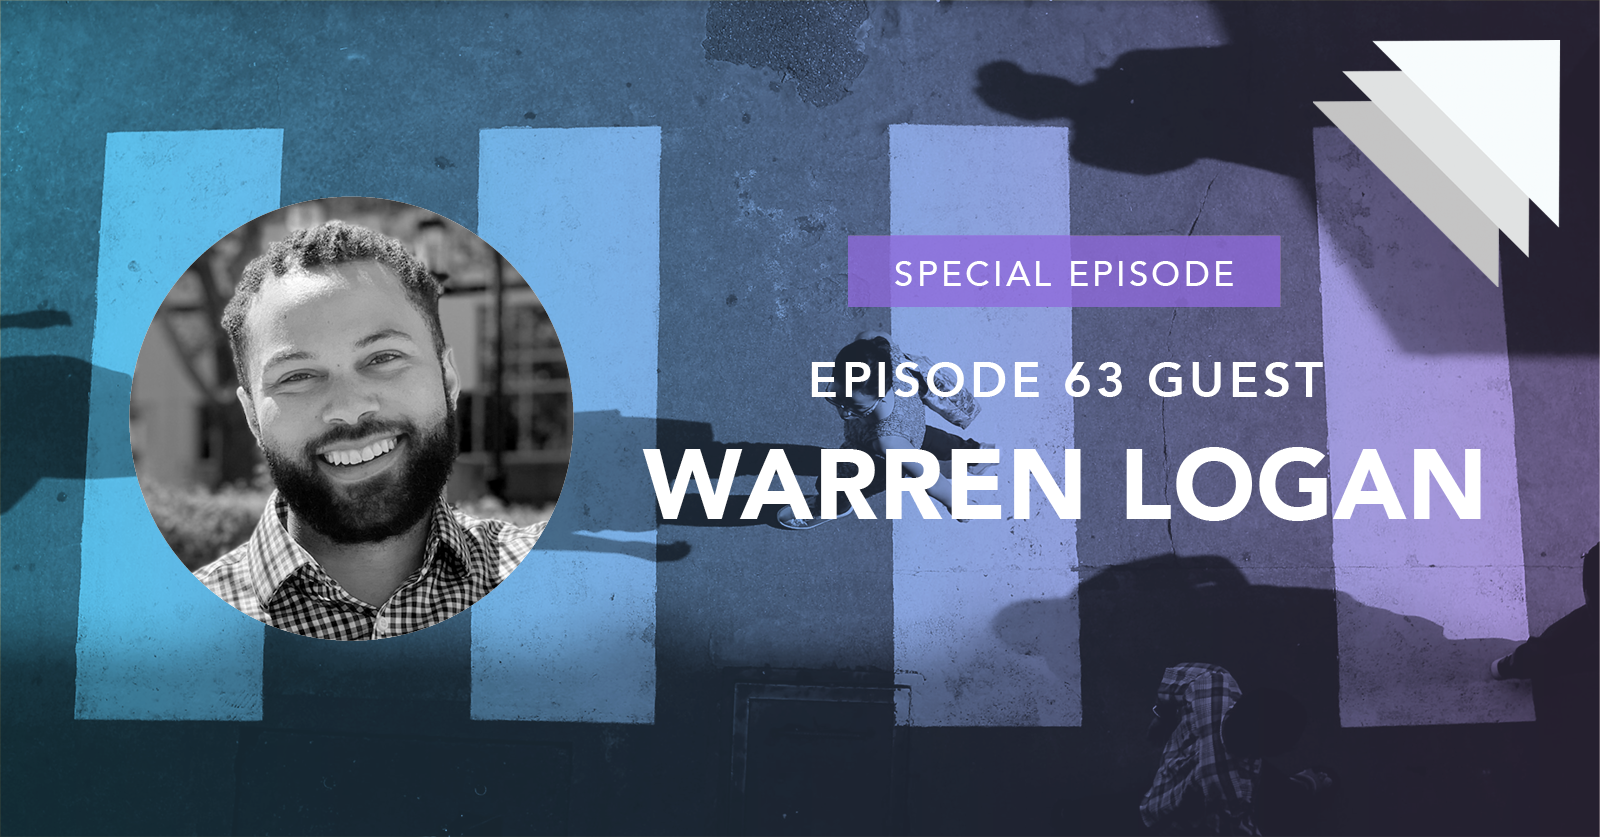 Episode 63 guest Warren Logan